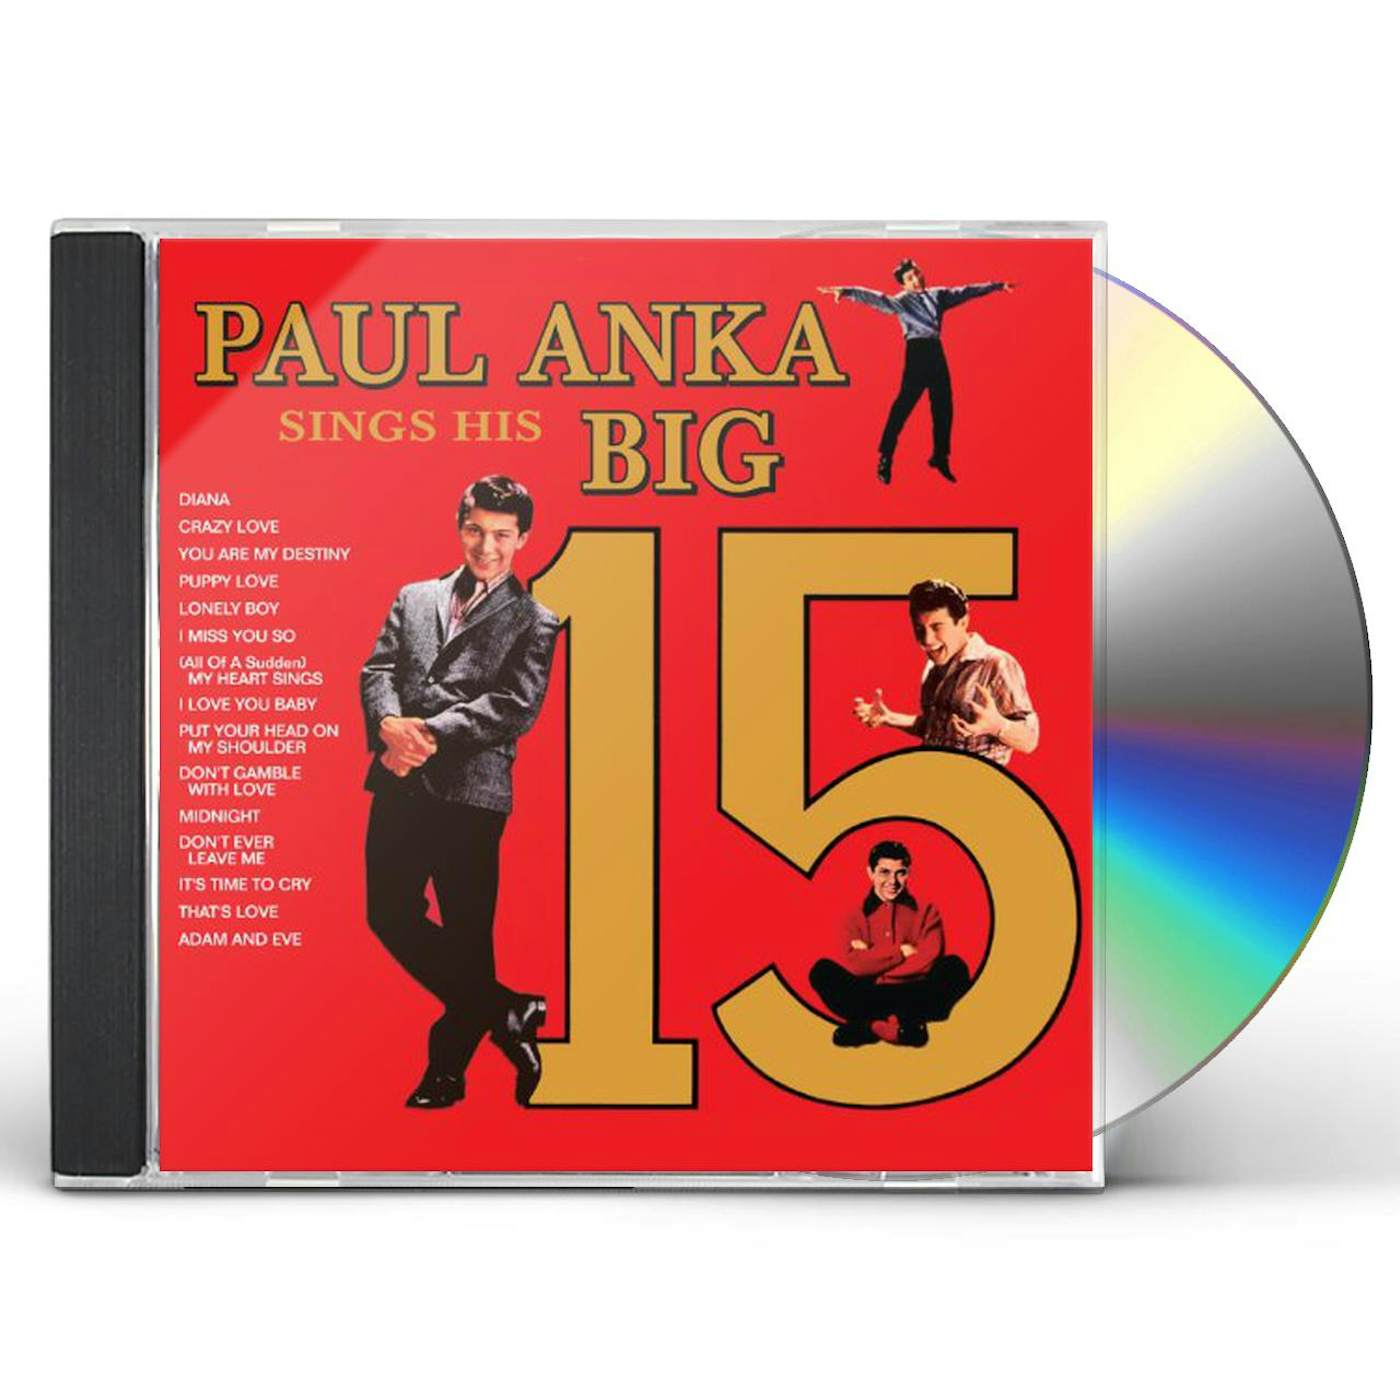 PAUL ANKA'S SINGS HIS BIG 15 CD